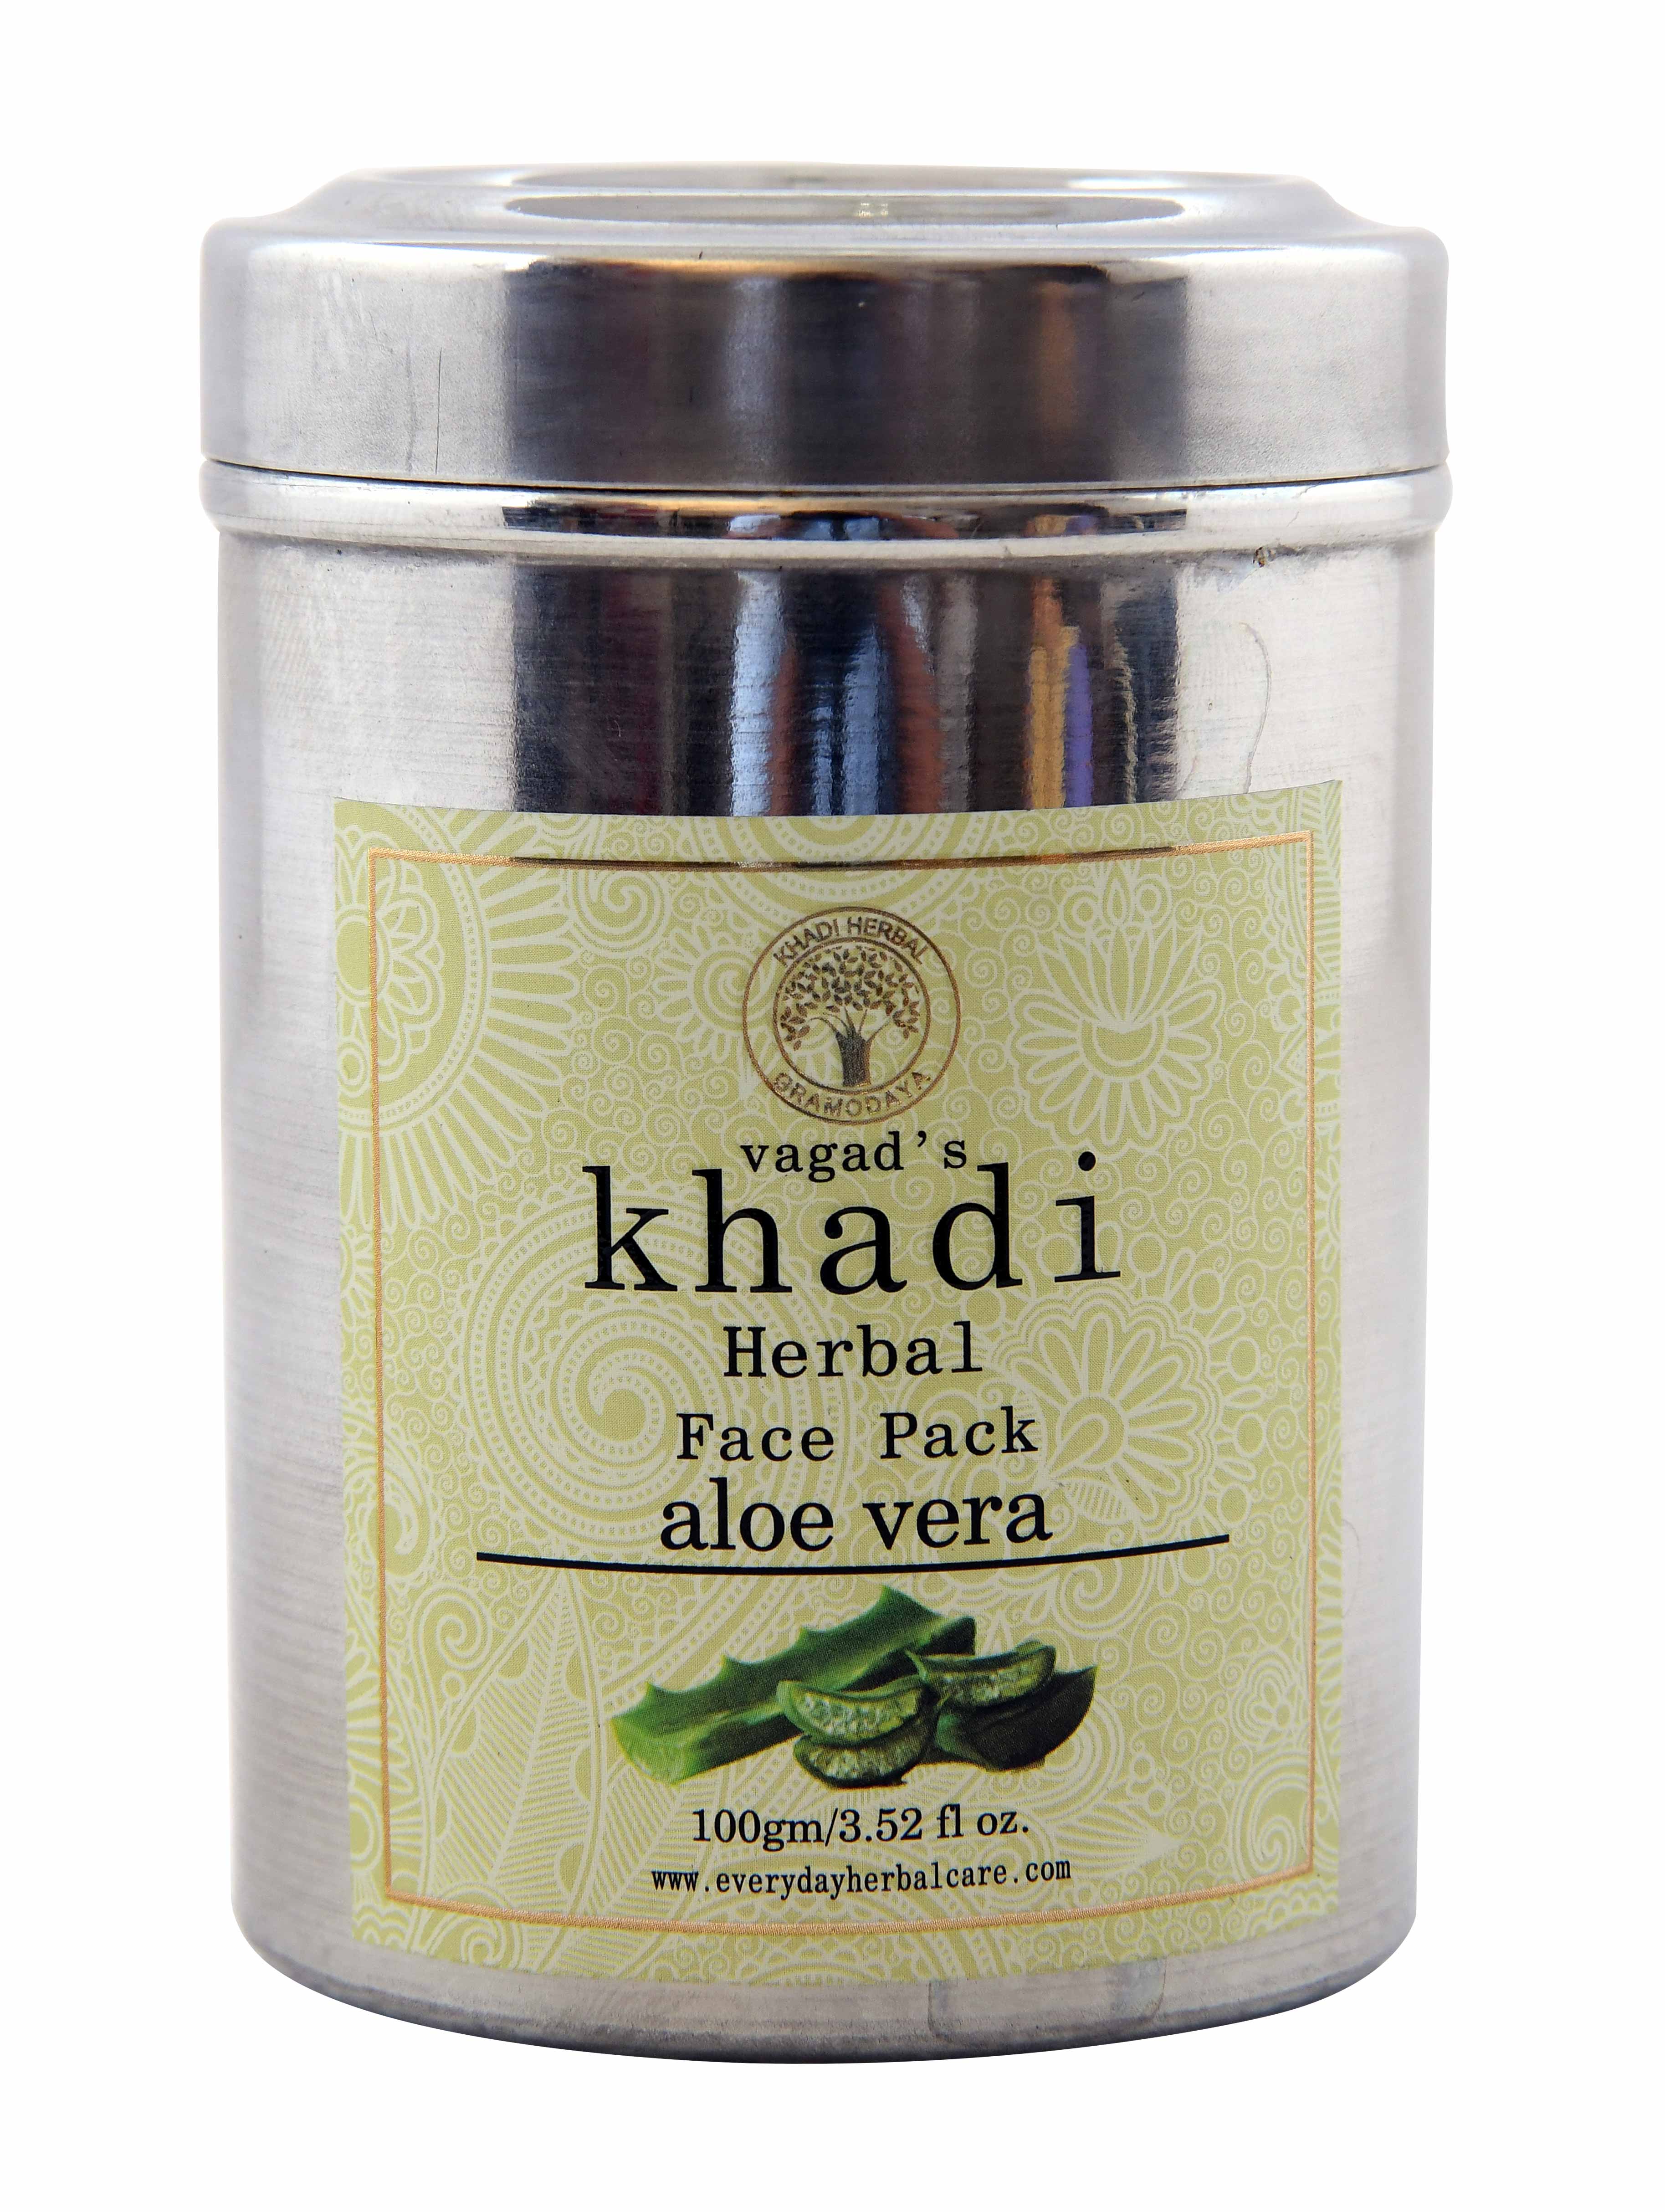 Buy Vagad's Khadi Aloe Vera Face Pack at Best Price Online